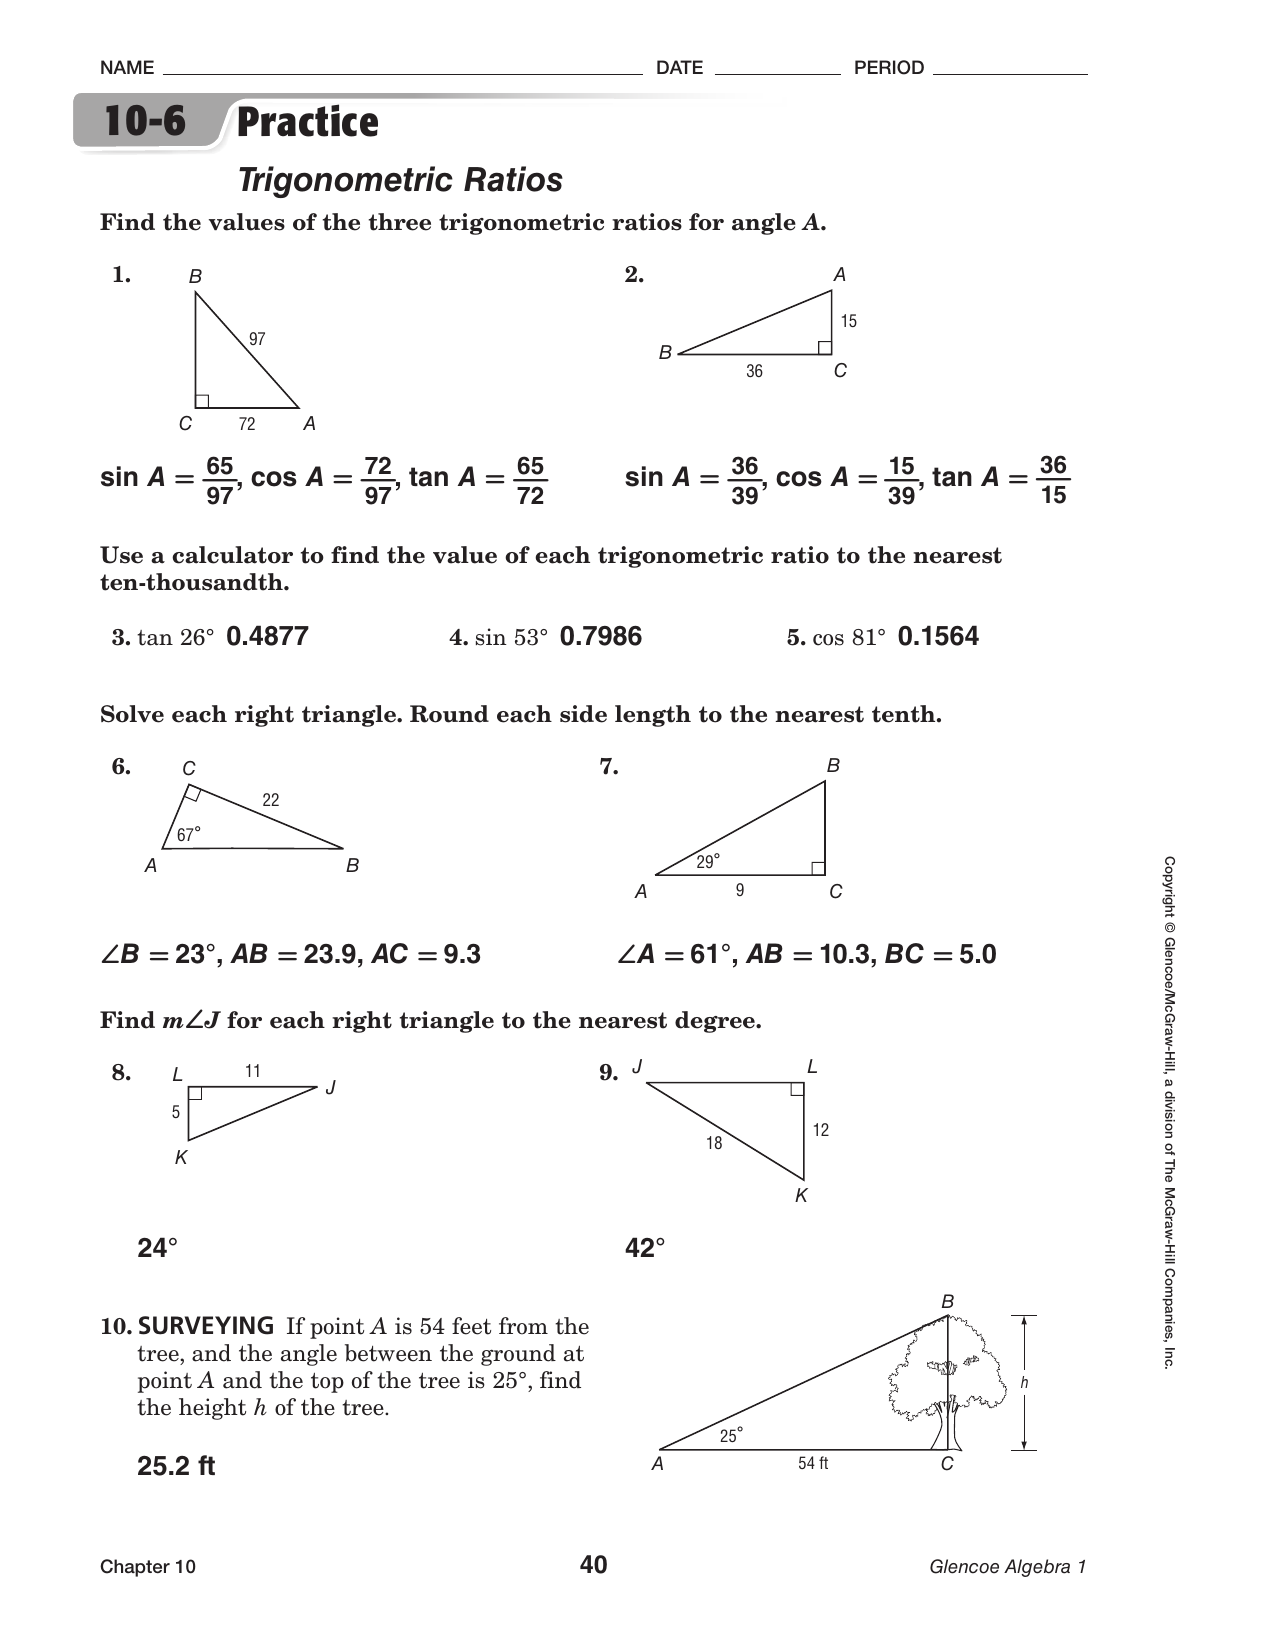 20-20 Practice Trigonometric Ratios With Trigonometric Ratios Worksheet Answers